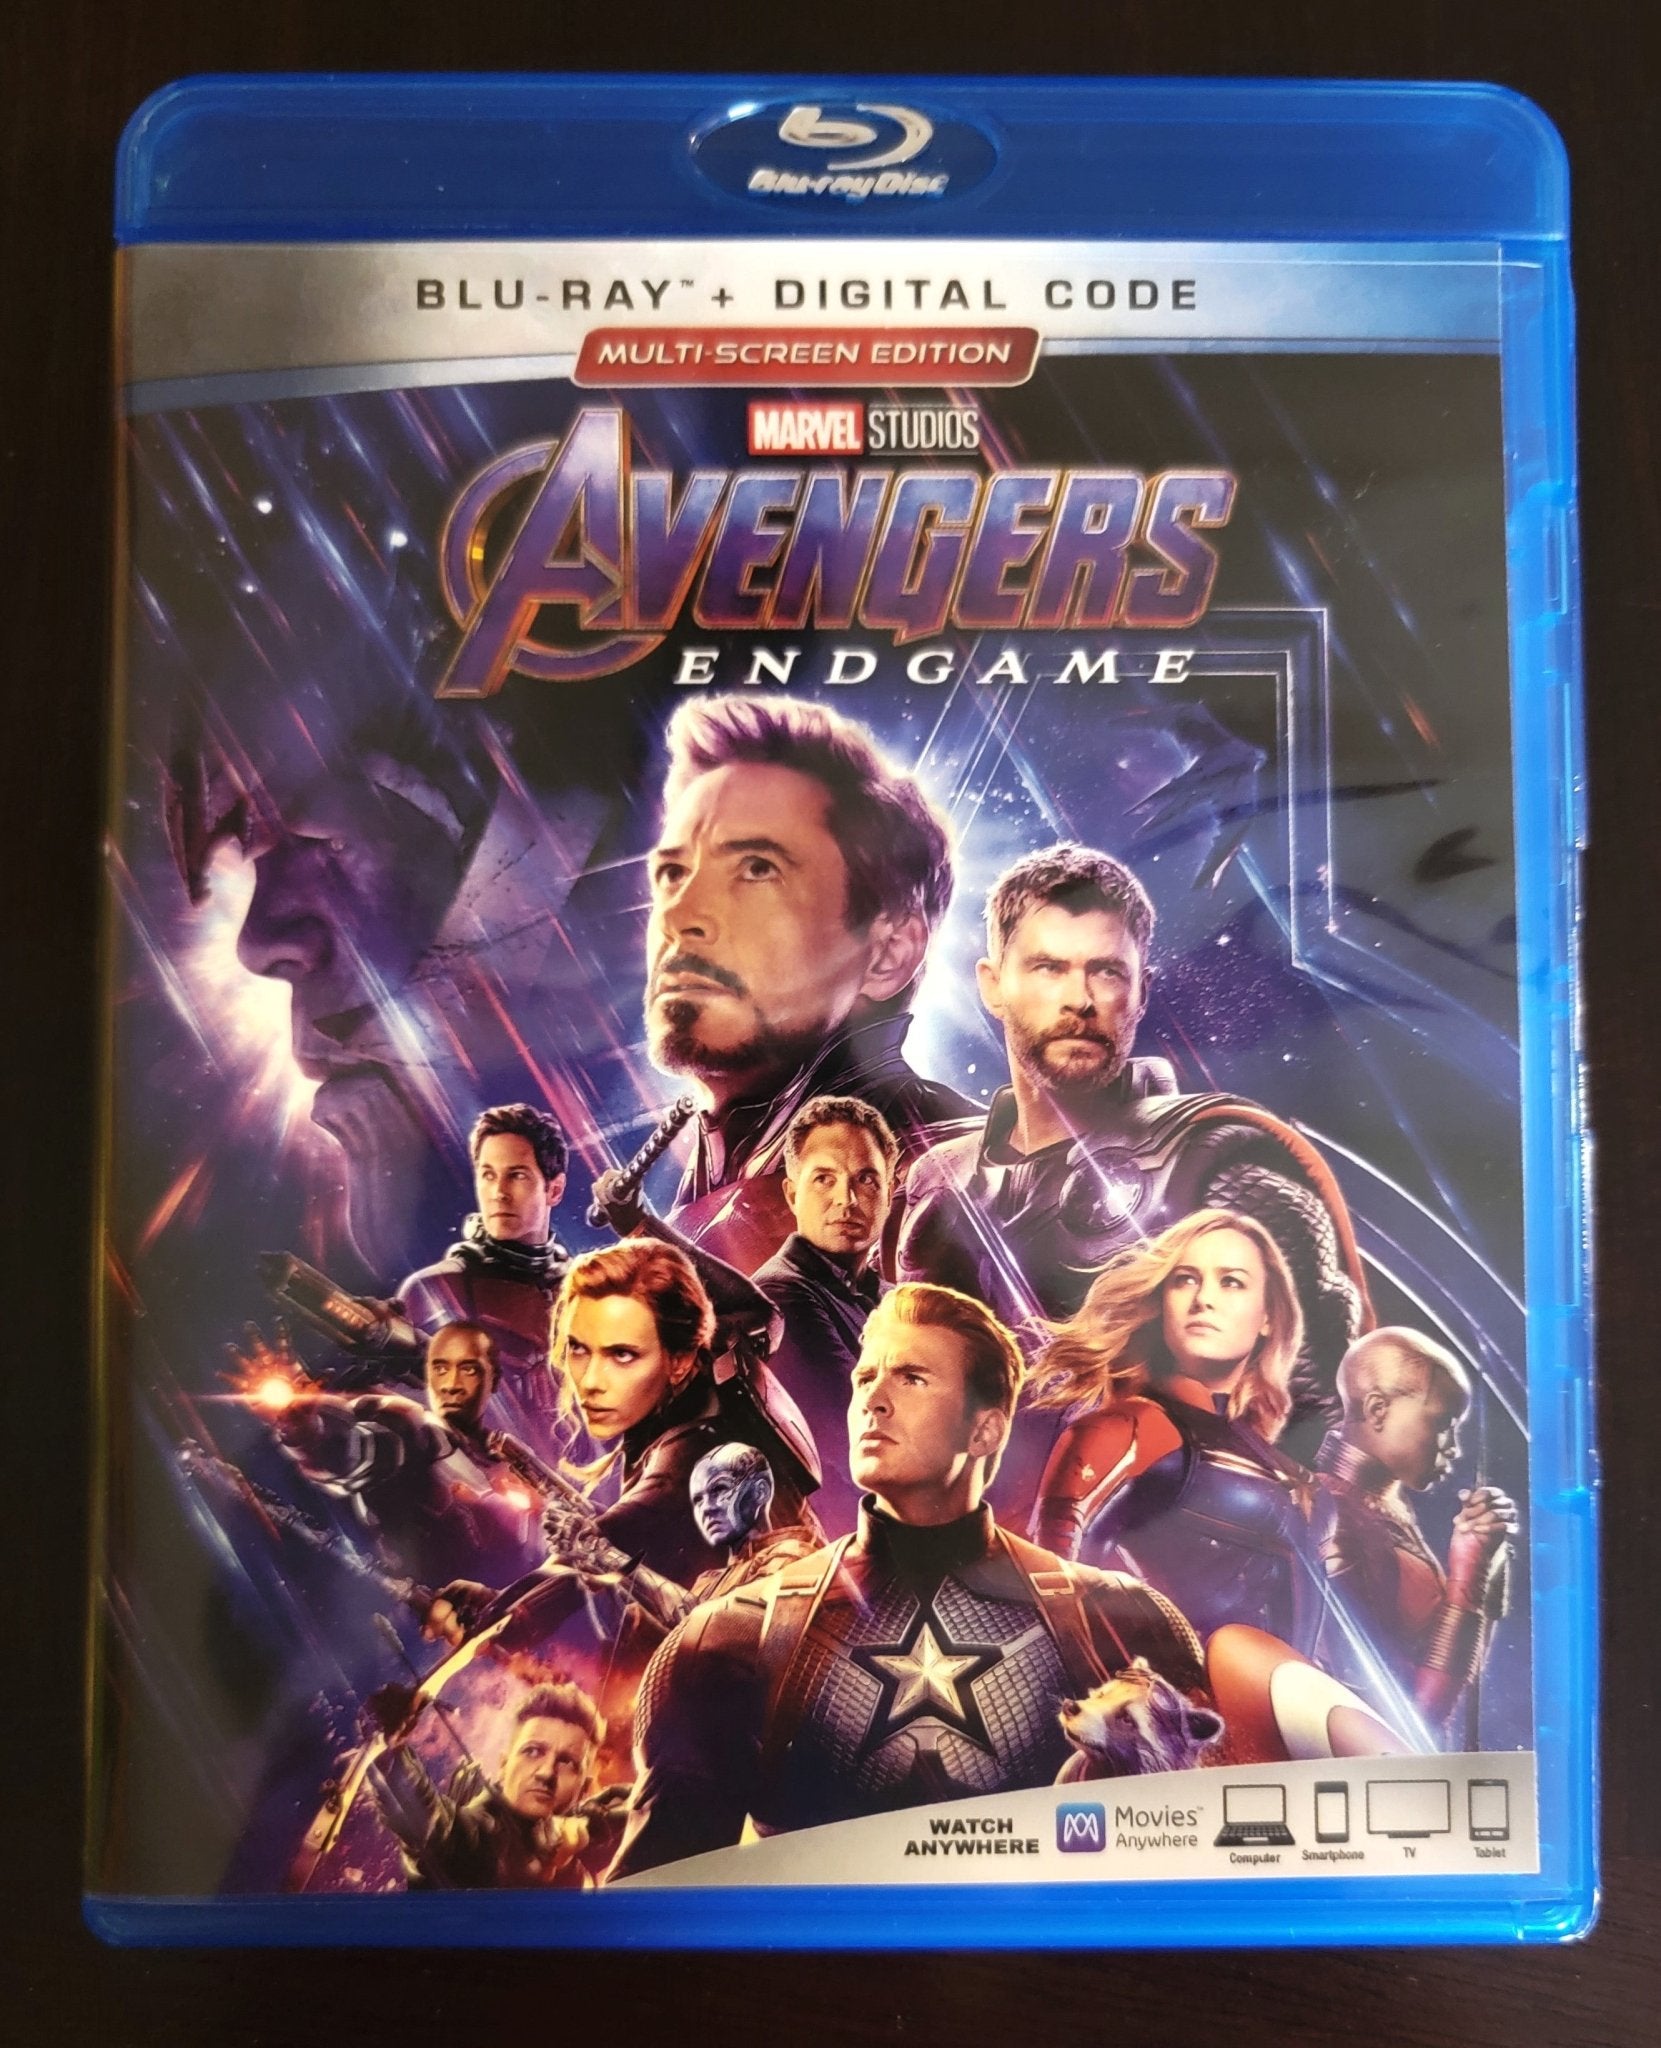 Marvel Studio - Avengers Endgame | DVD | Multi-Screen Edition - No Digital Copy - Blu-ray - Steady Bunny Shop